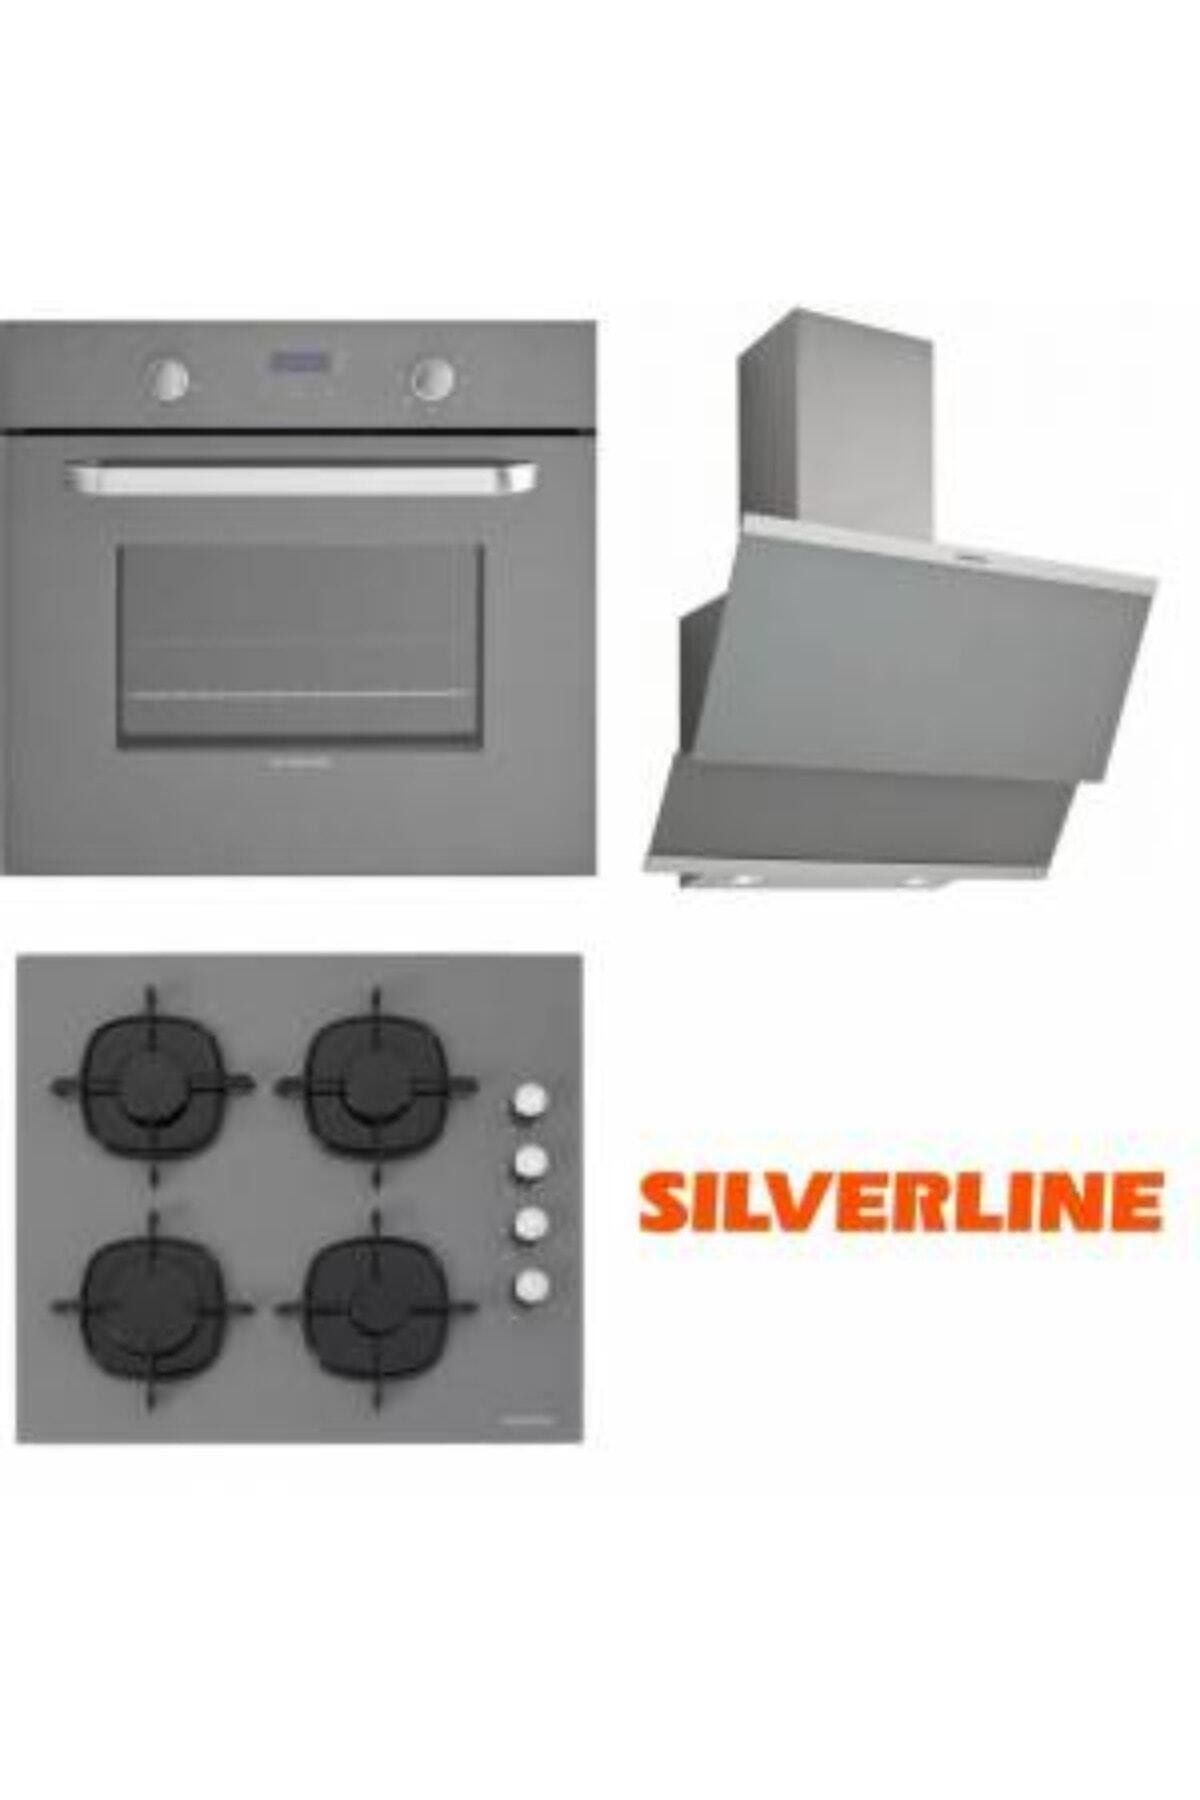 Silverline Gri Cam Ankastre Set BO6181S02 - CS5335S01 - 3420 Classy